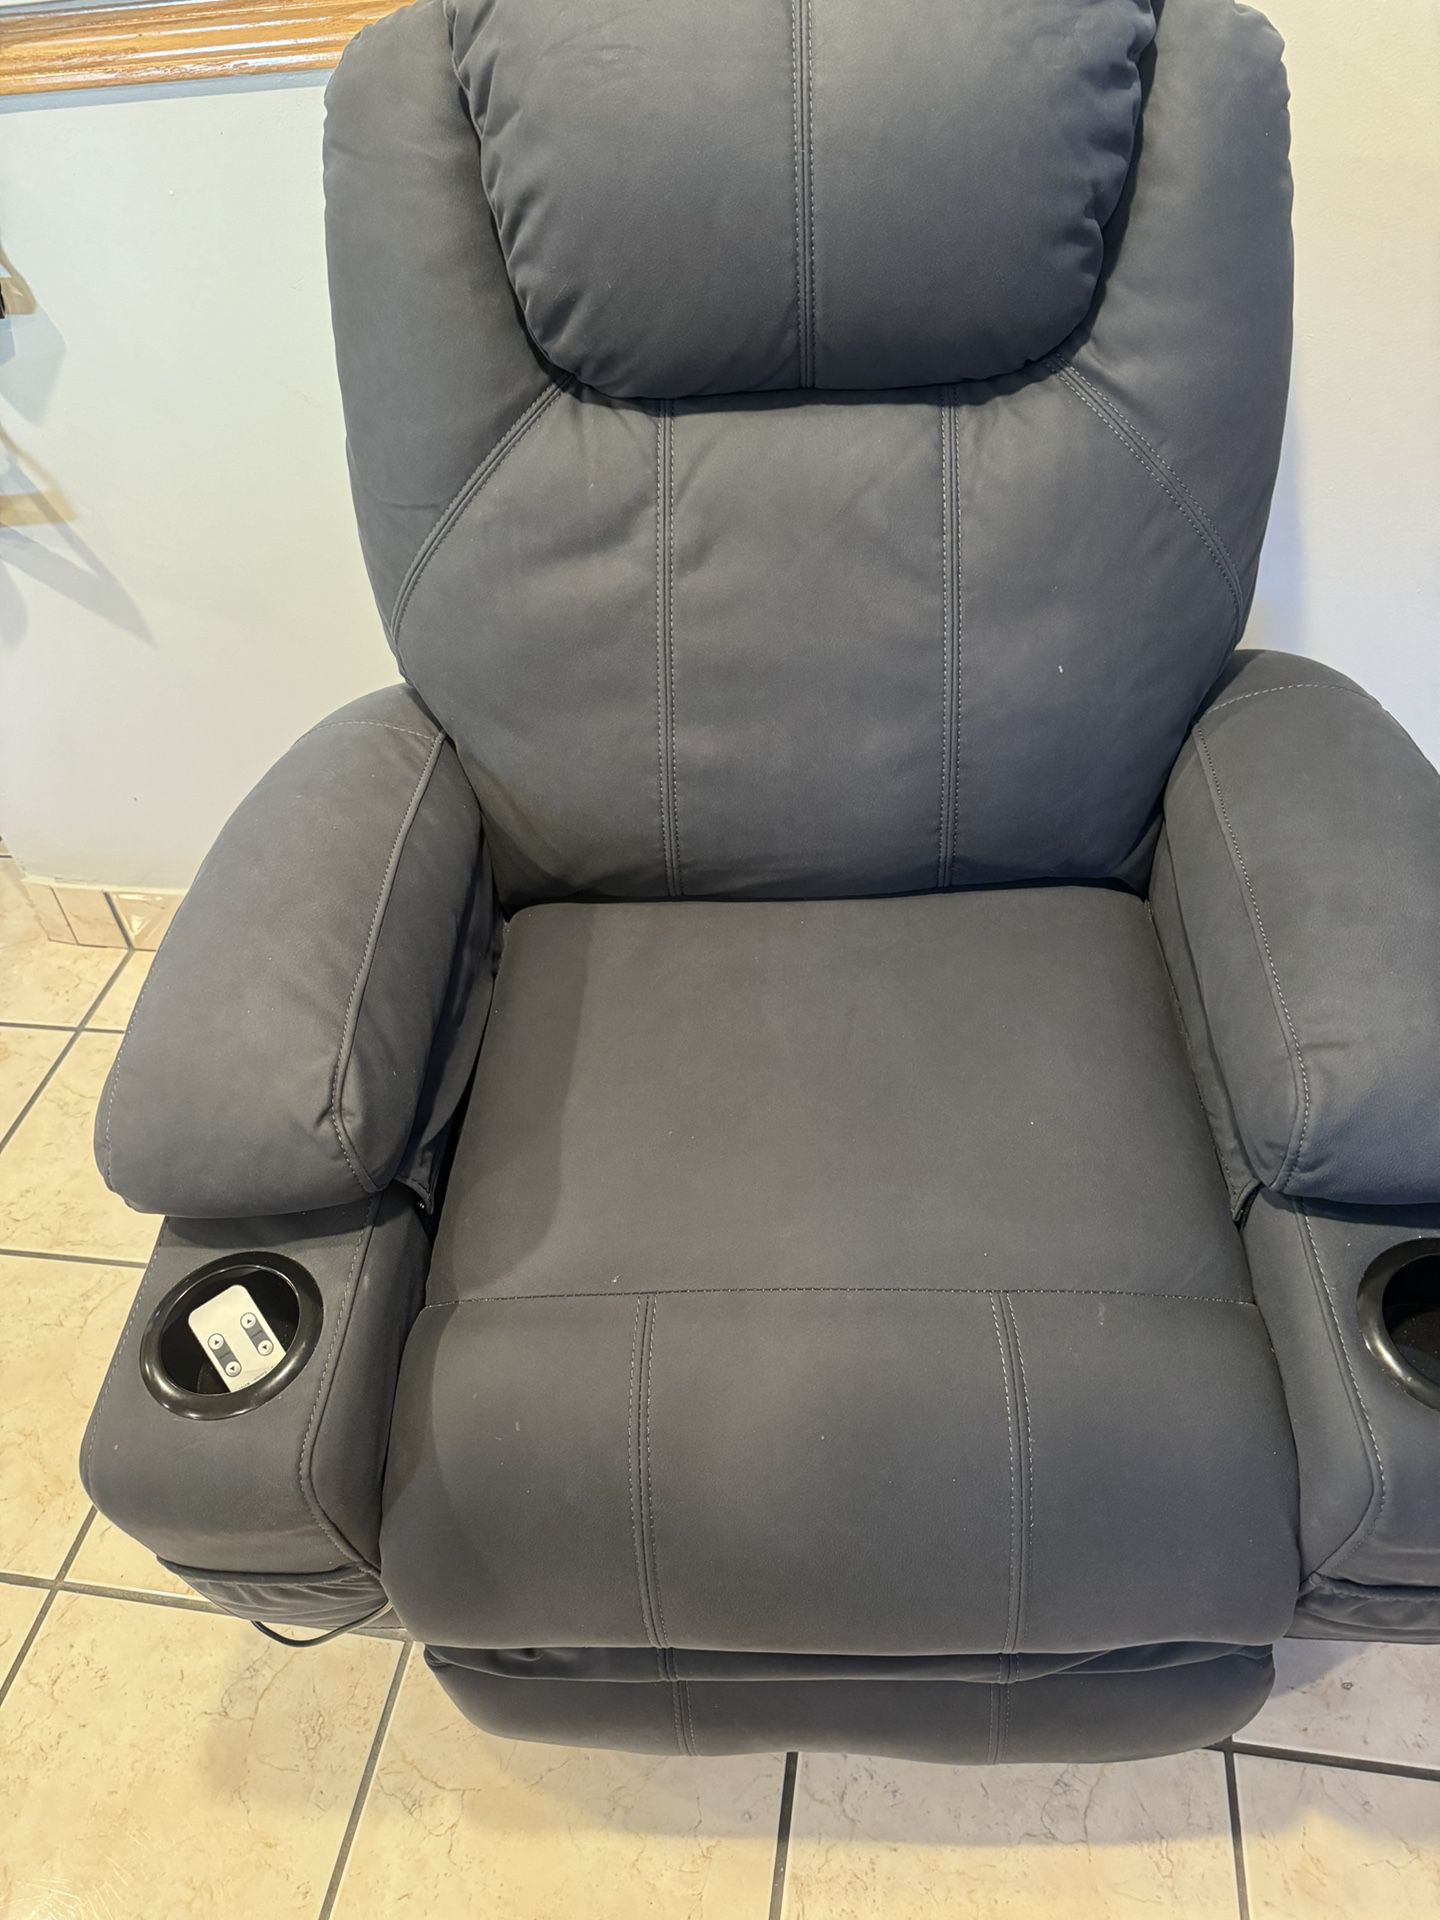 Recliner Heated Massage Chair 